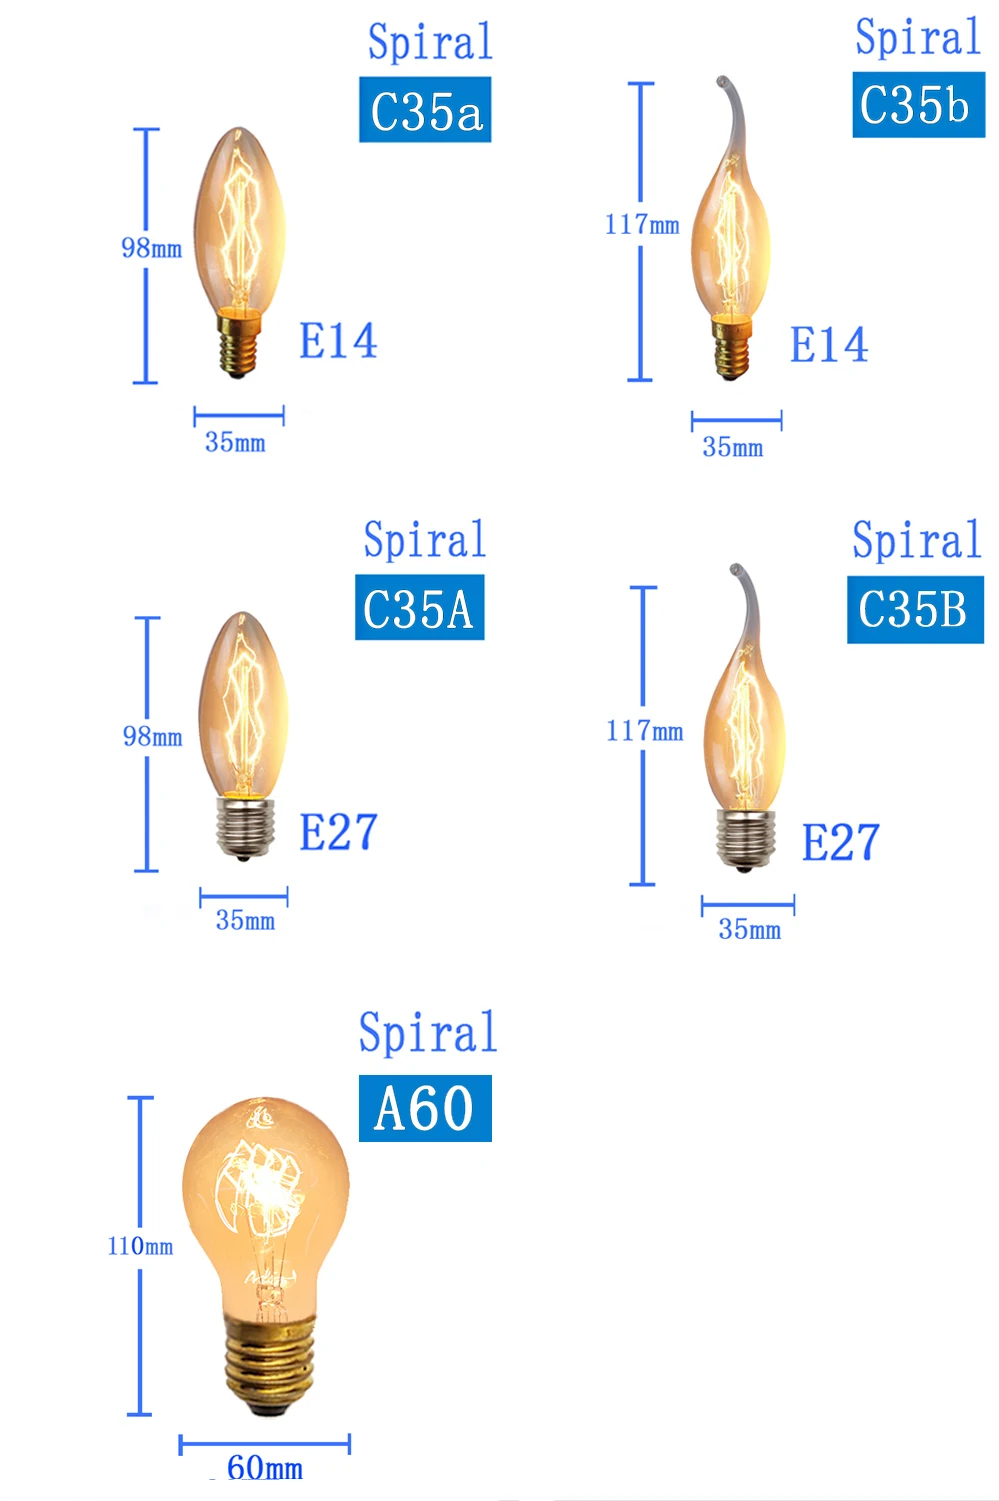 Retro Edison Bulb Filament Incandescent Light Vintage Lamp Ampoule bulbs E14 E27 40w Home Decor Lighting ST64 G95 T300